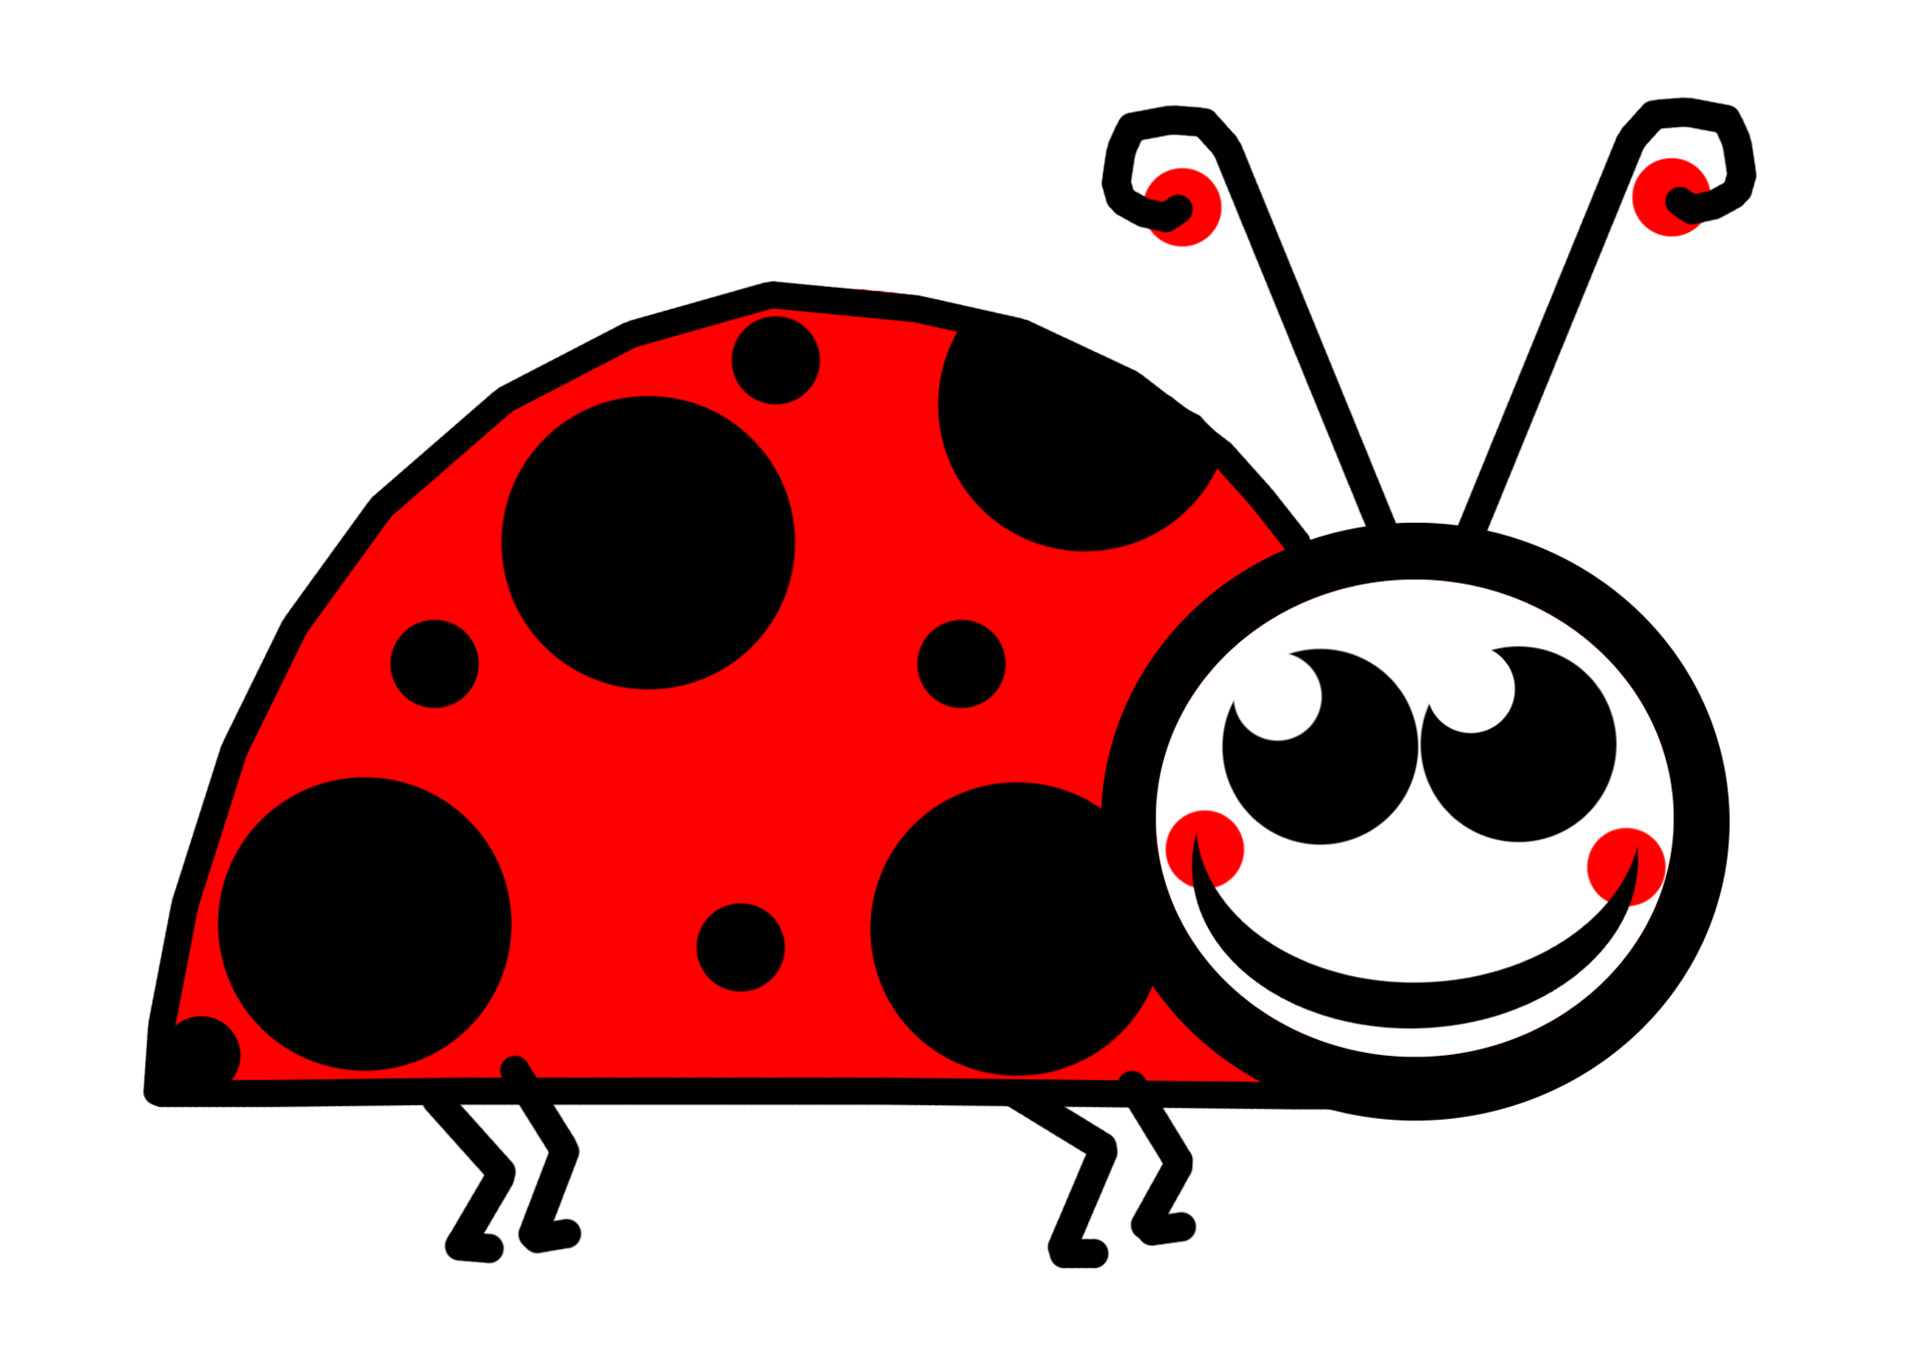 Ladybug lady bug clip art free stock photo public domain pictures ...